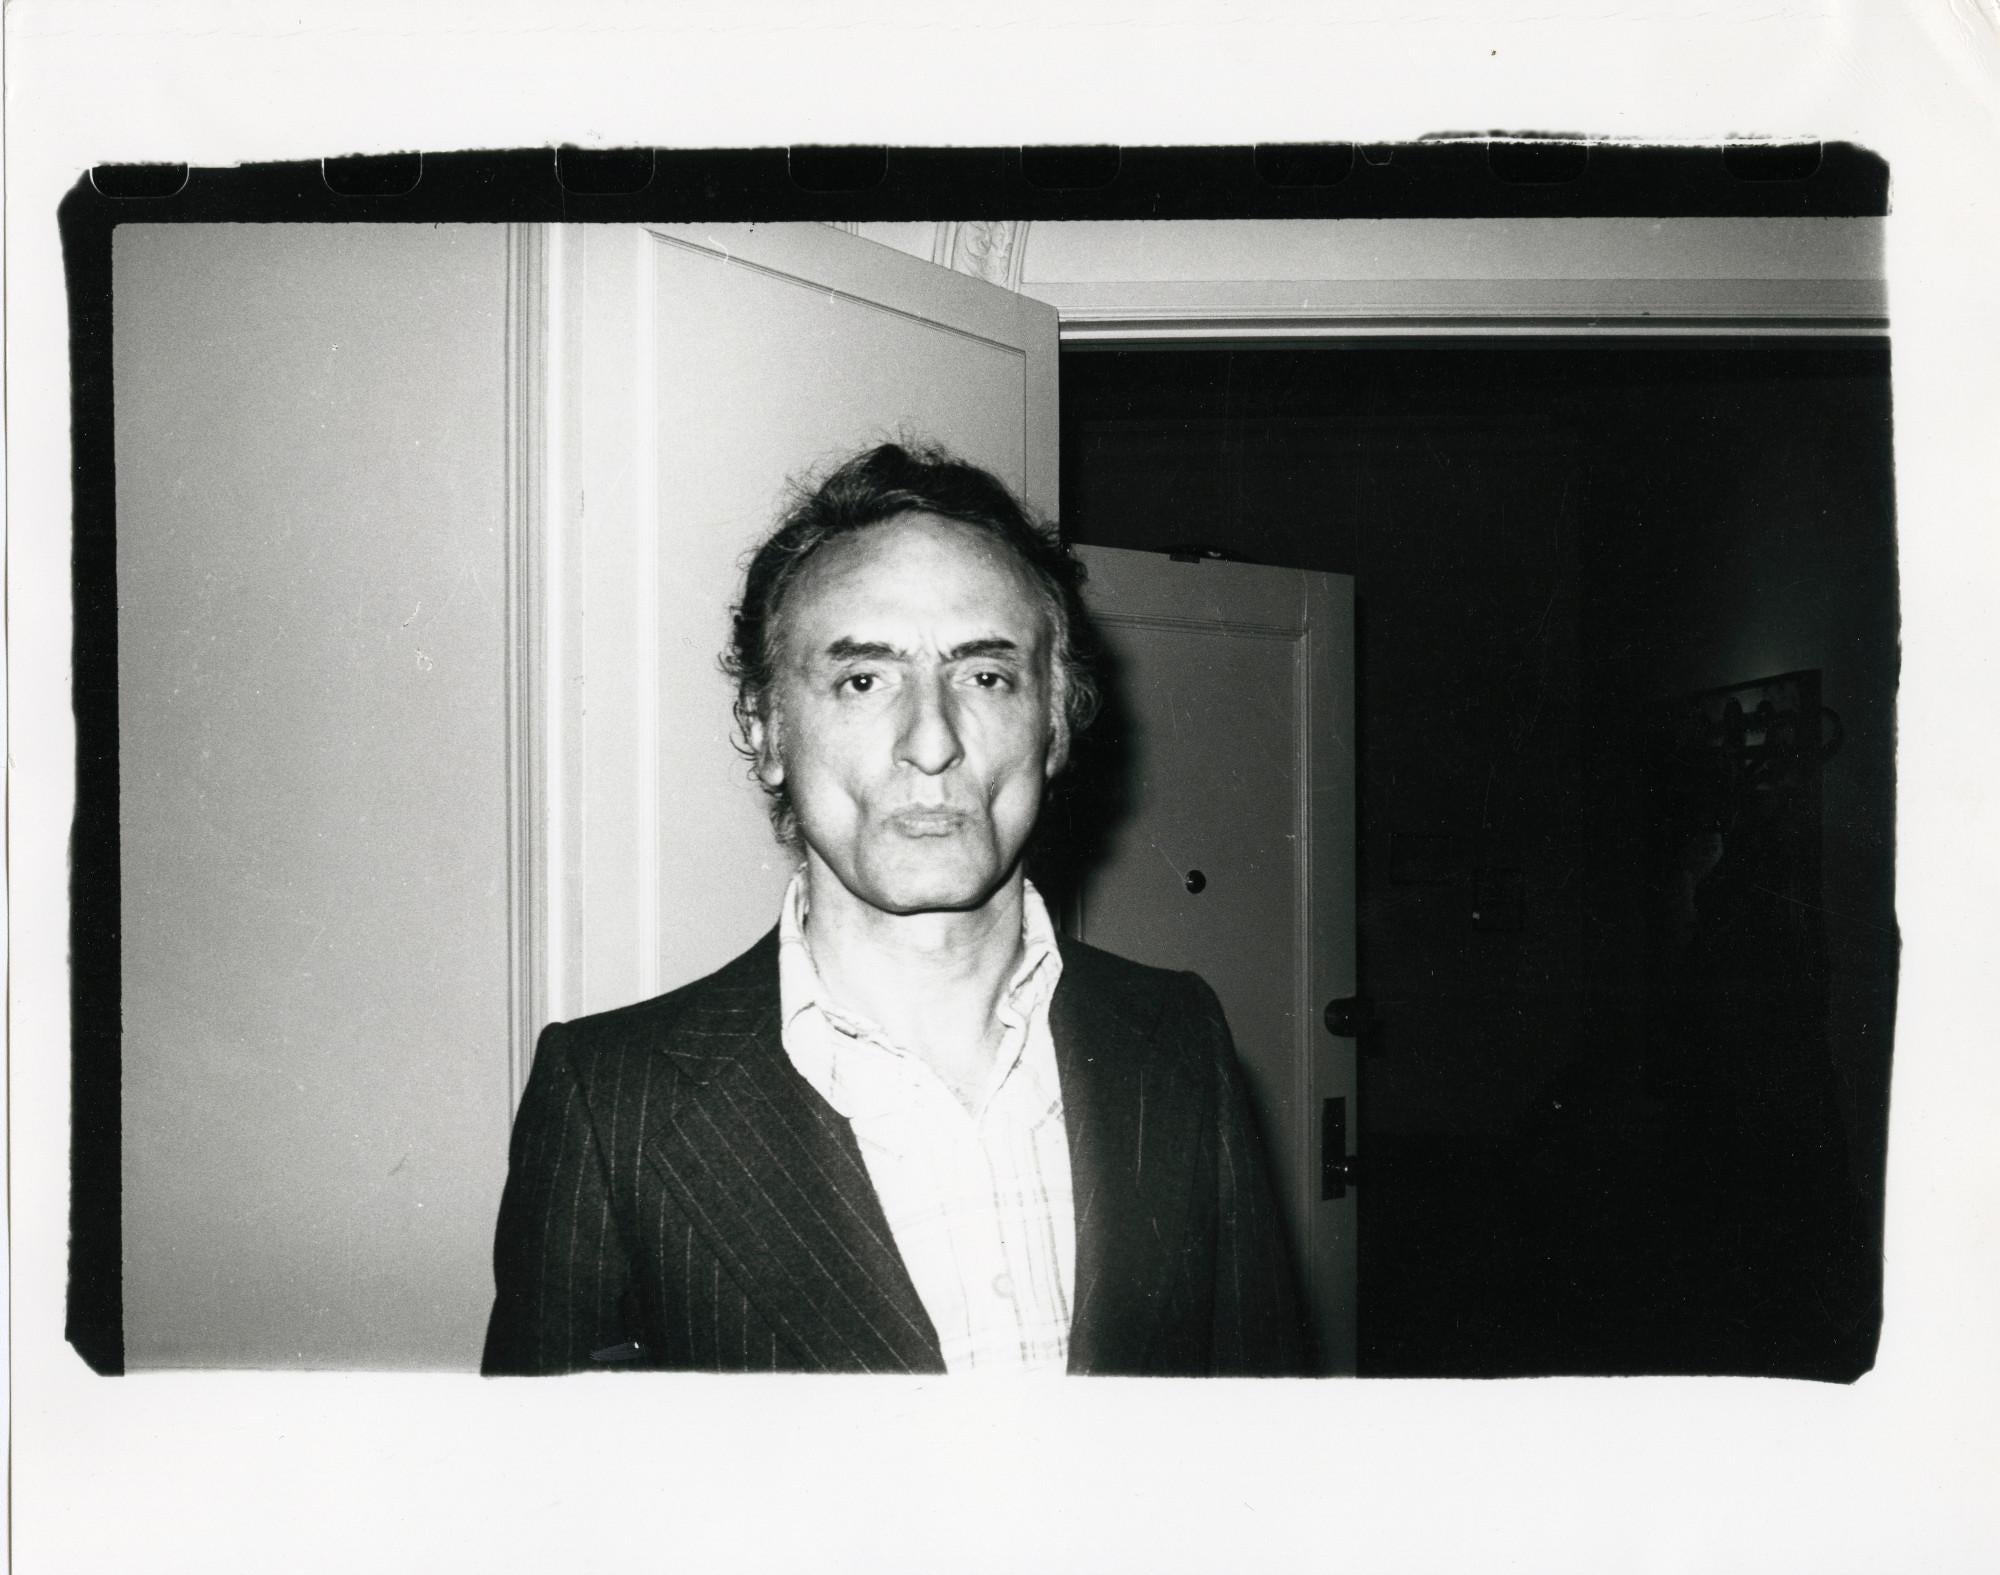 Andy Warhol Portrait Photograph – Larry Rivers